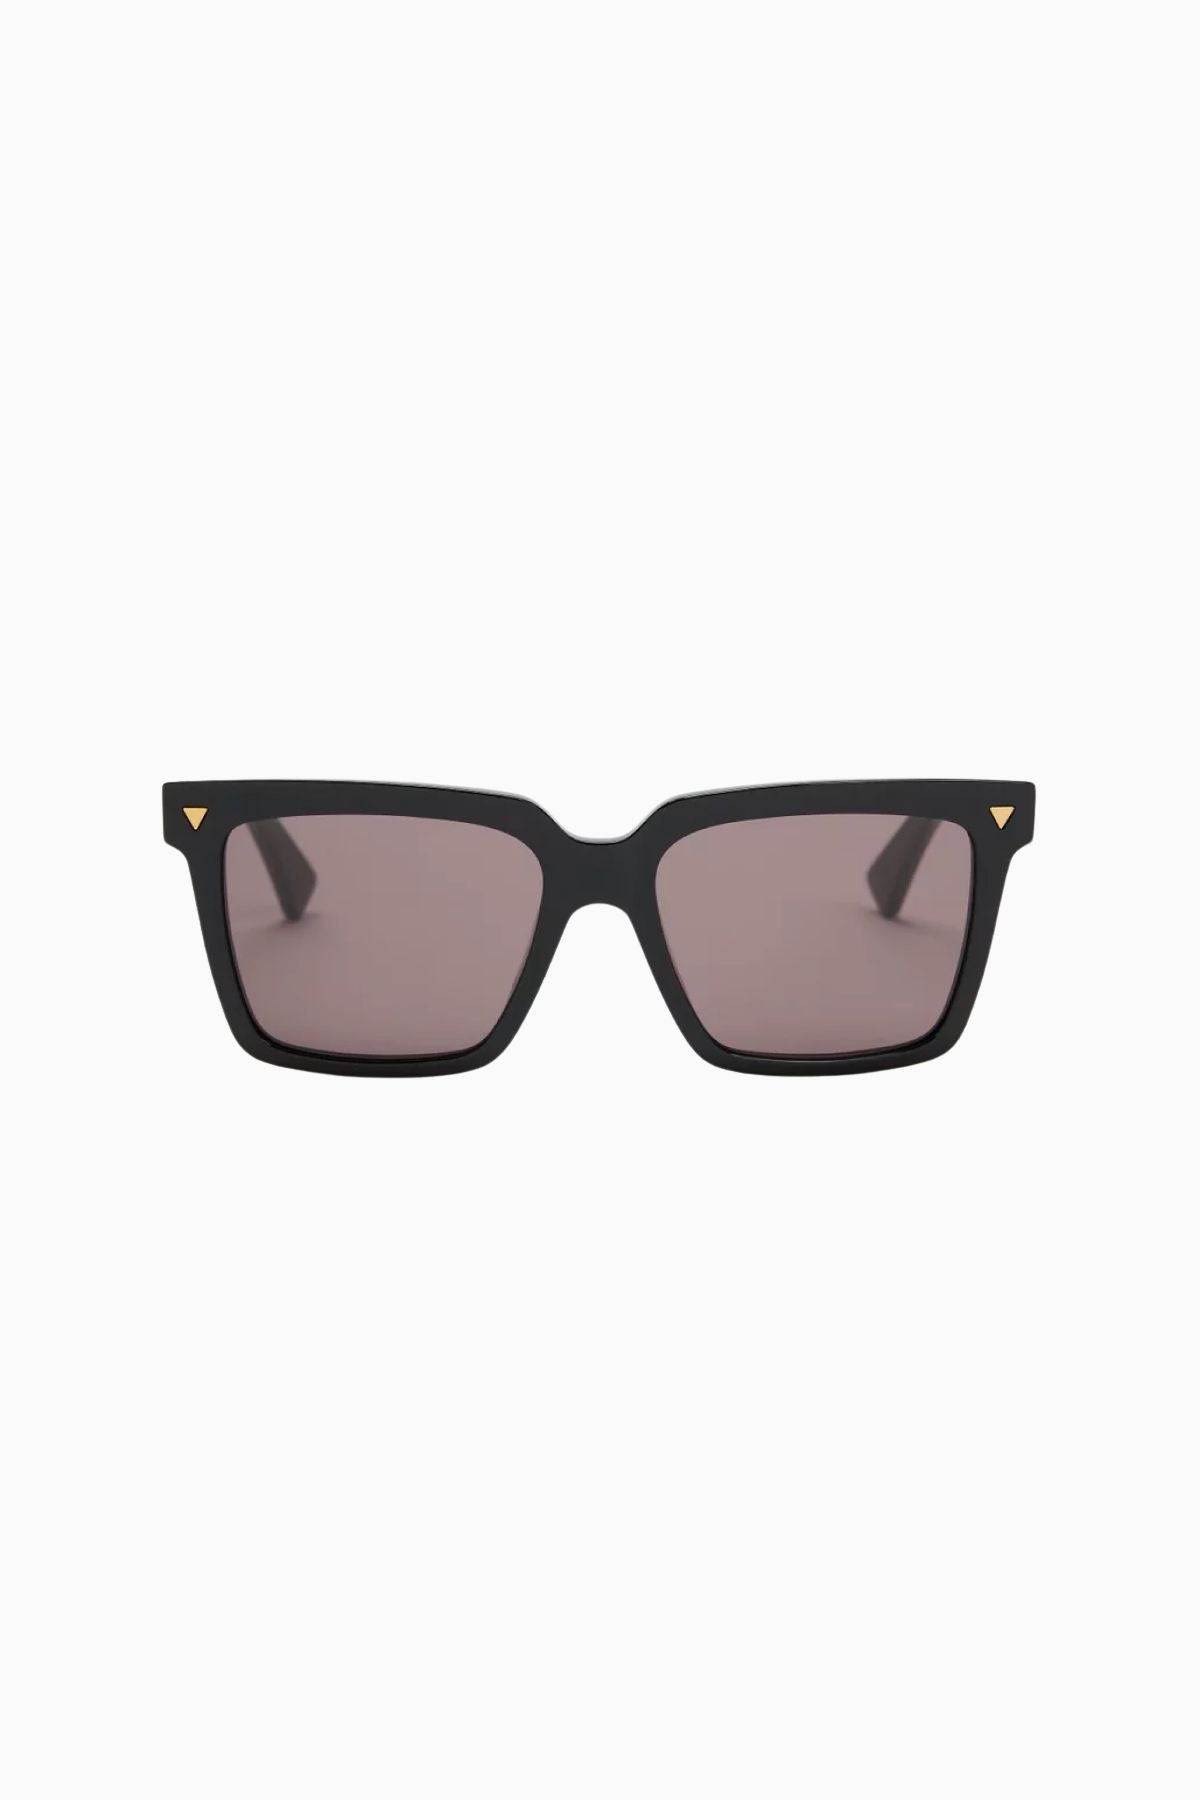 Bottega Veneta Square Framed Sunglasses - Black